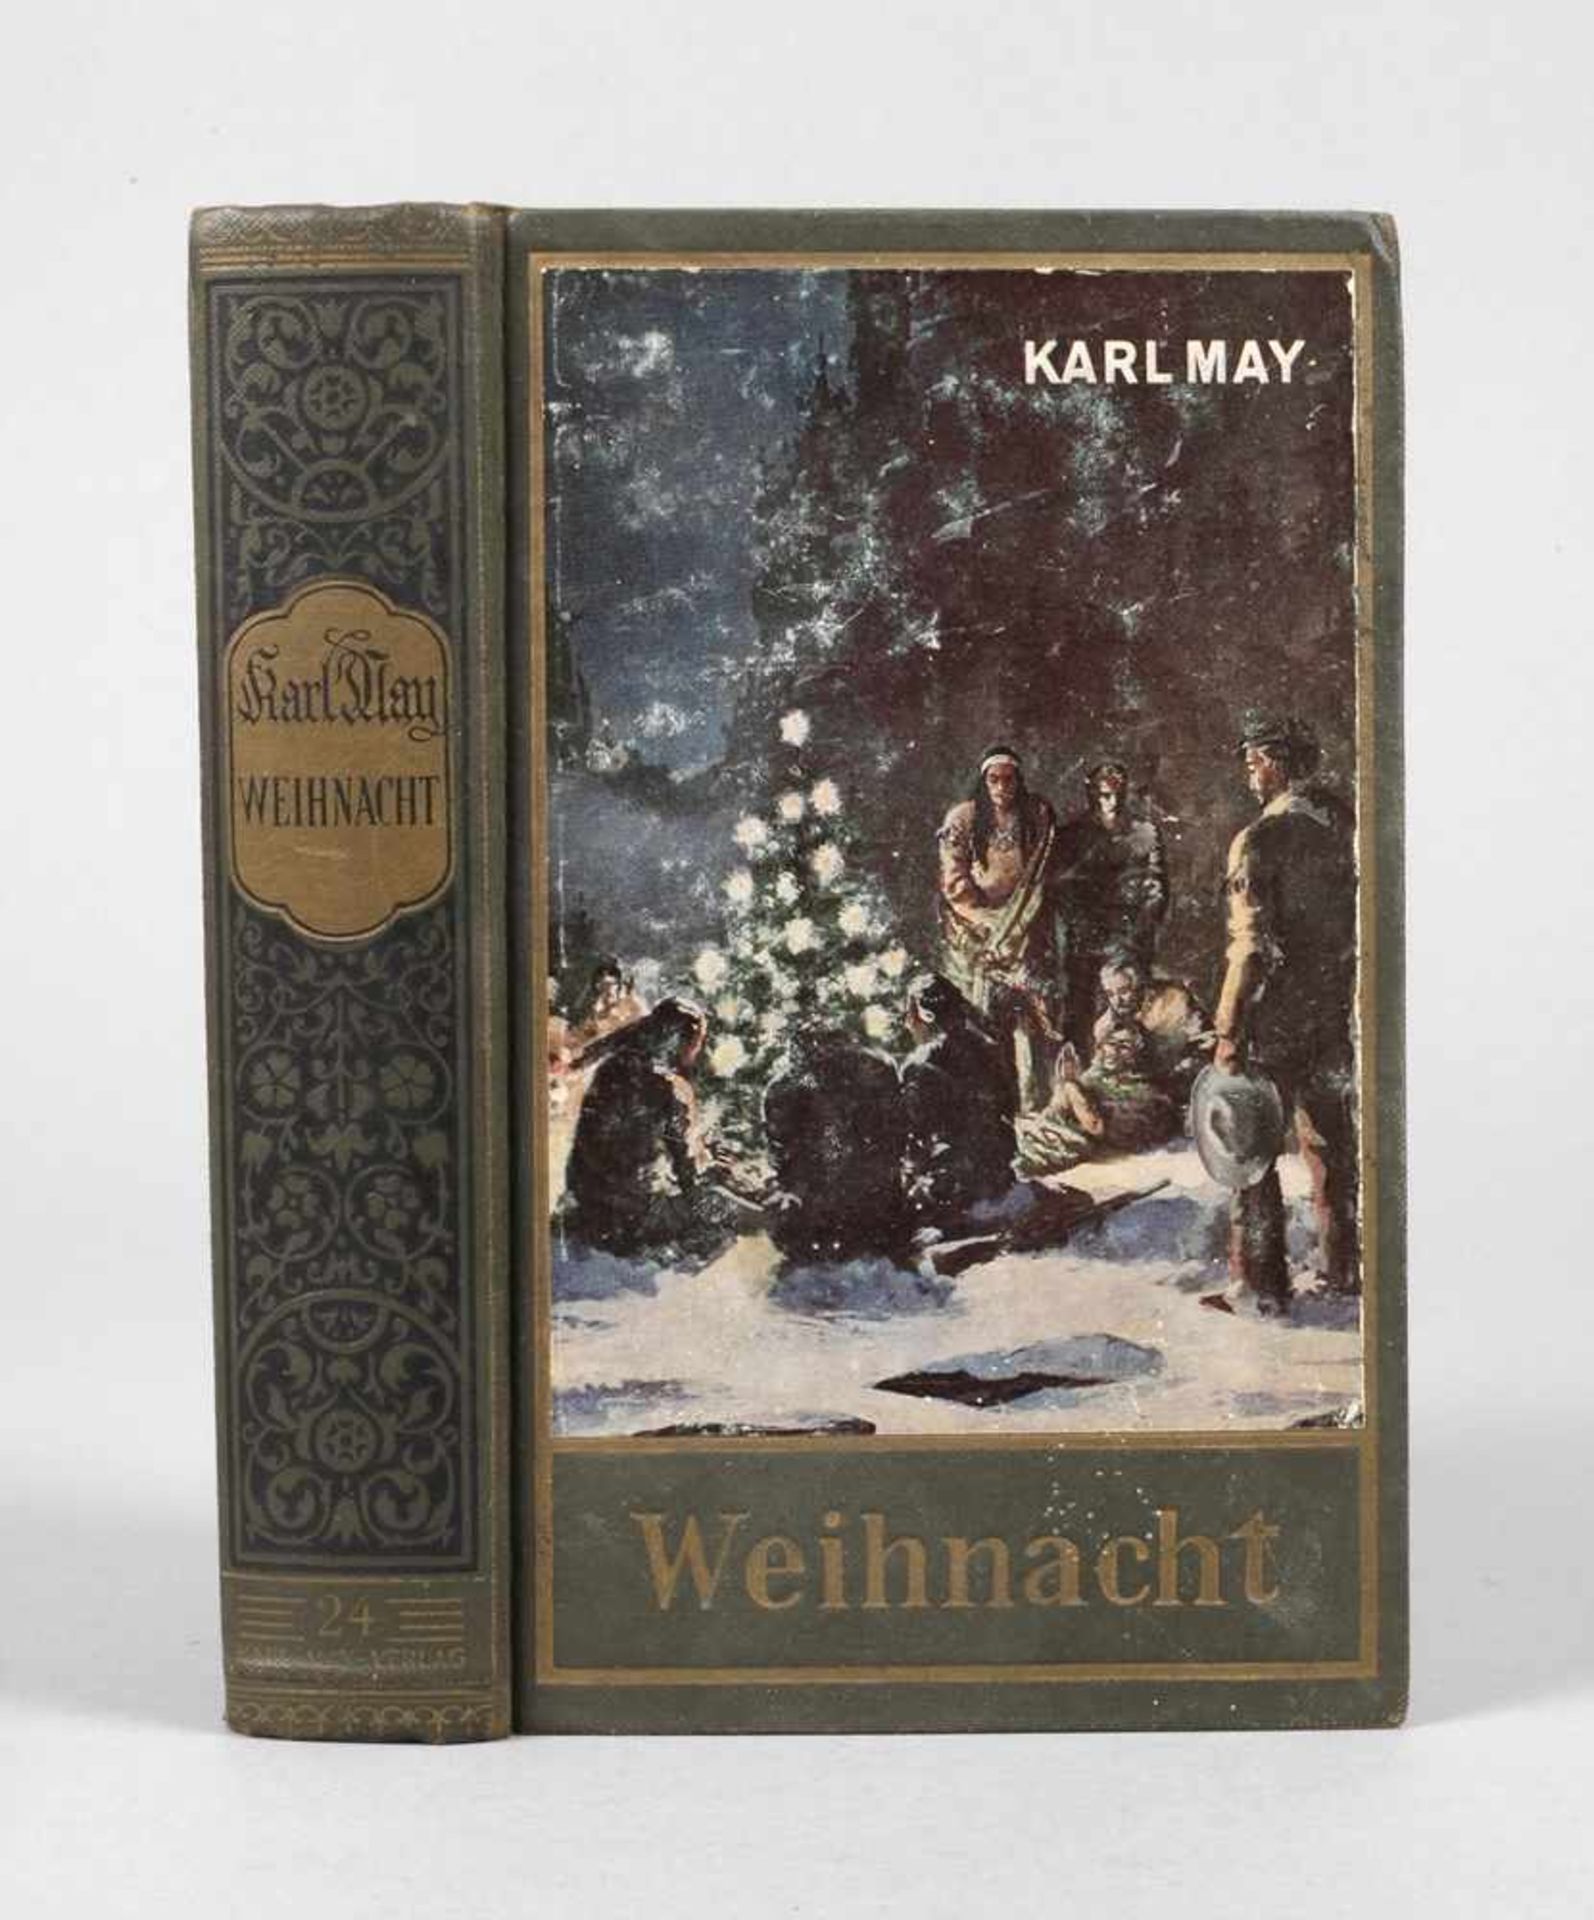 Karl May, WeihnachtKarl-May-Verlag Bamberg 1953, Format Kl. 8°, 500 S., Leineneinband, normale